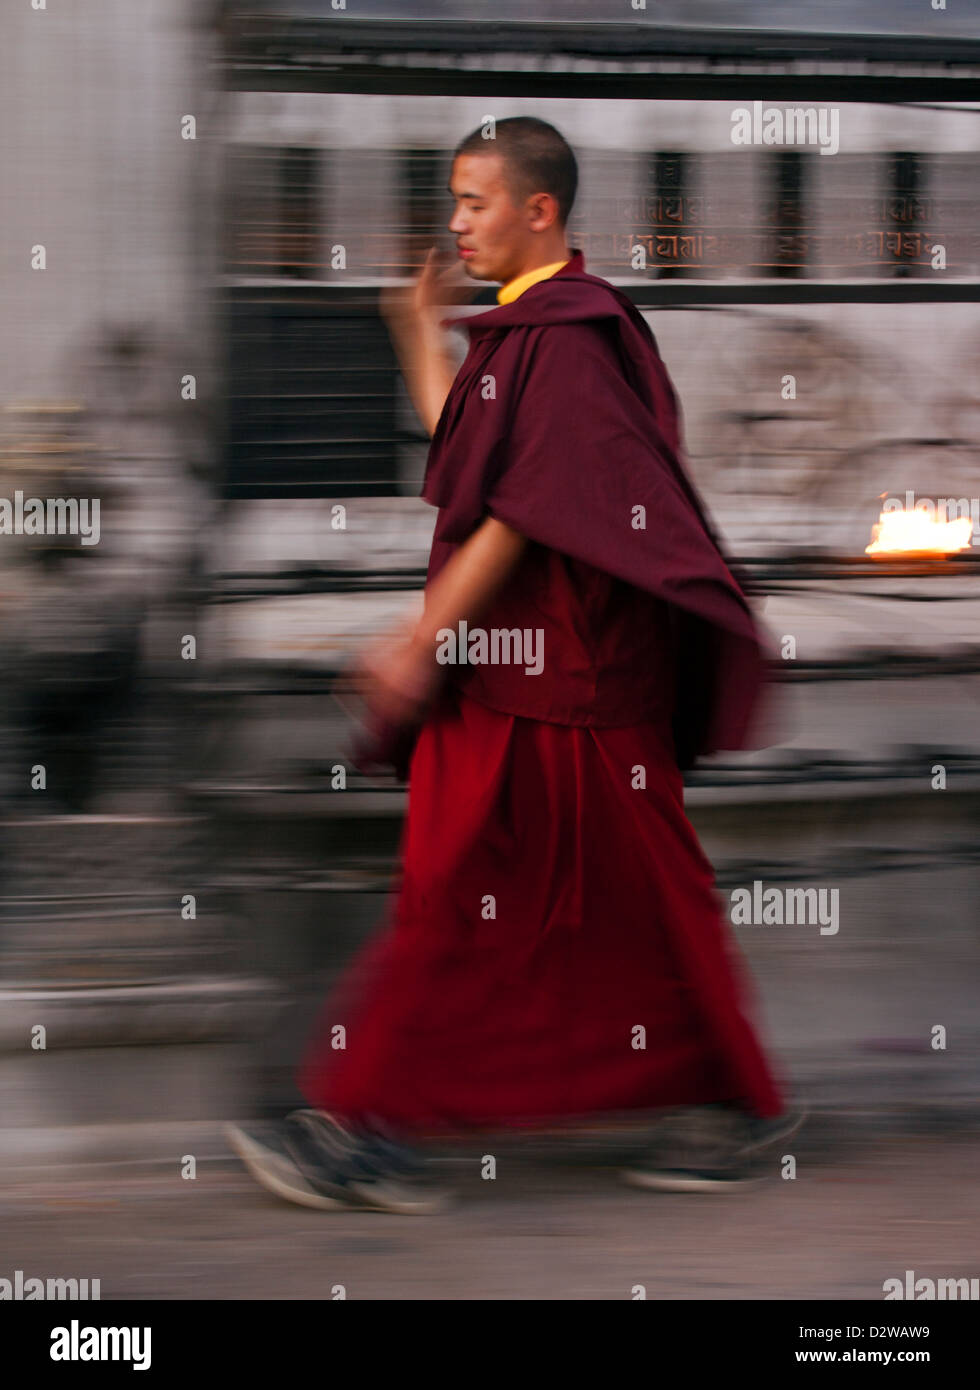 Monk spinning prayer wheels at the Swayambhunath Temple in Kathmandu, Nepal. Stock Photo